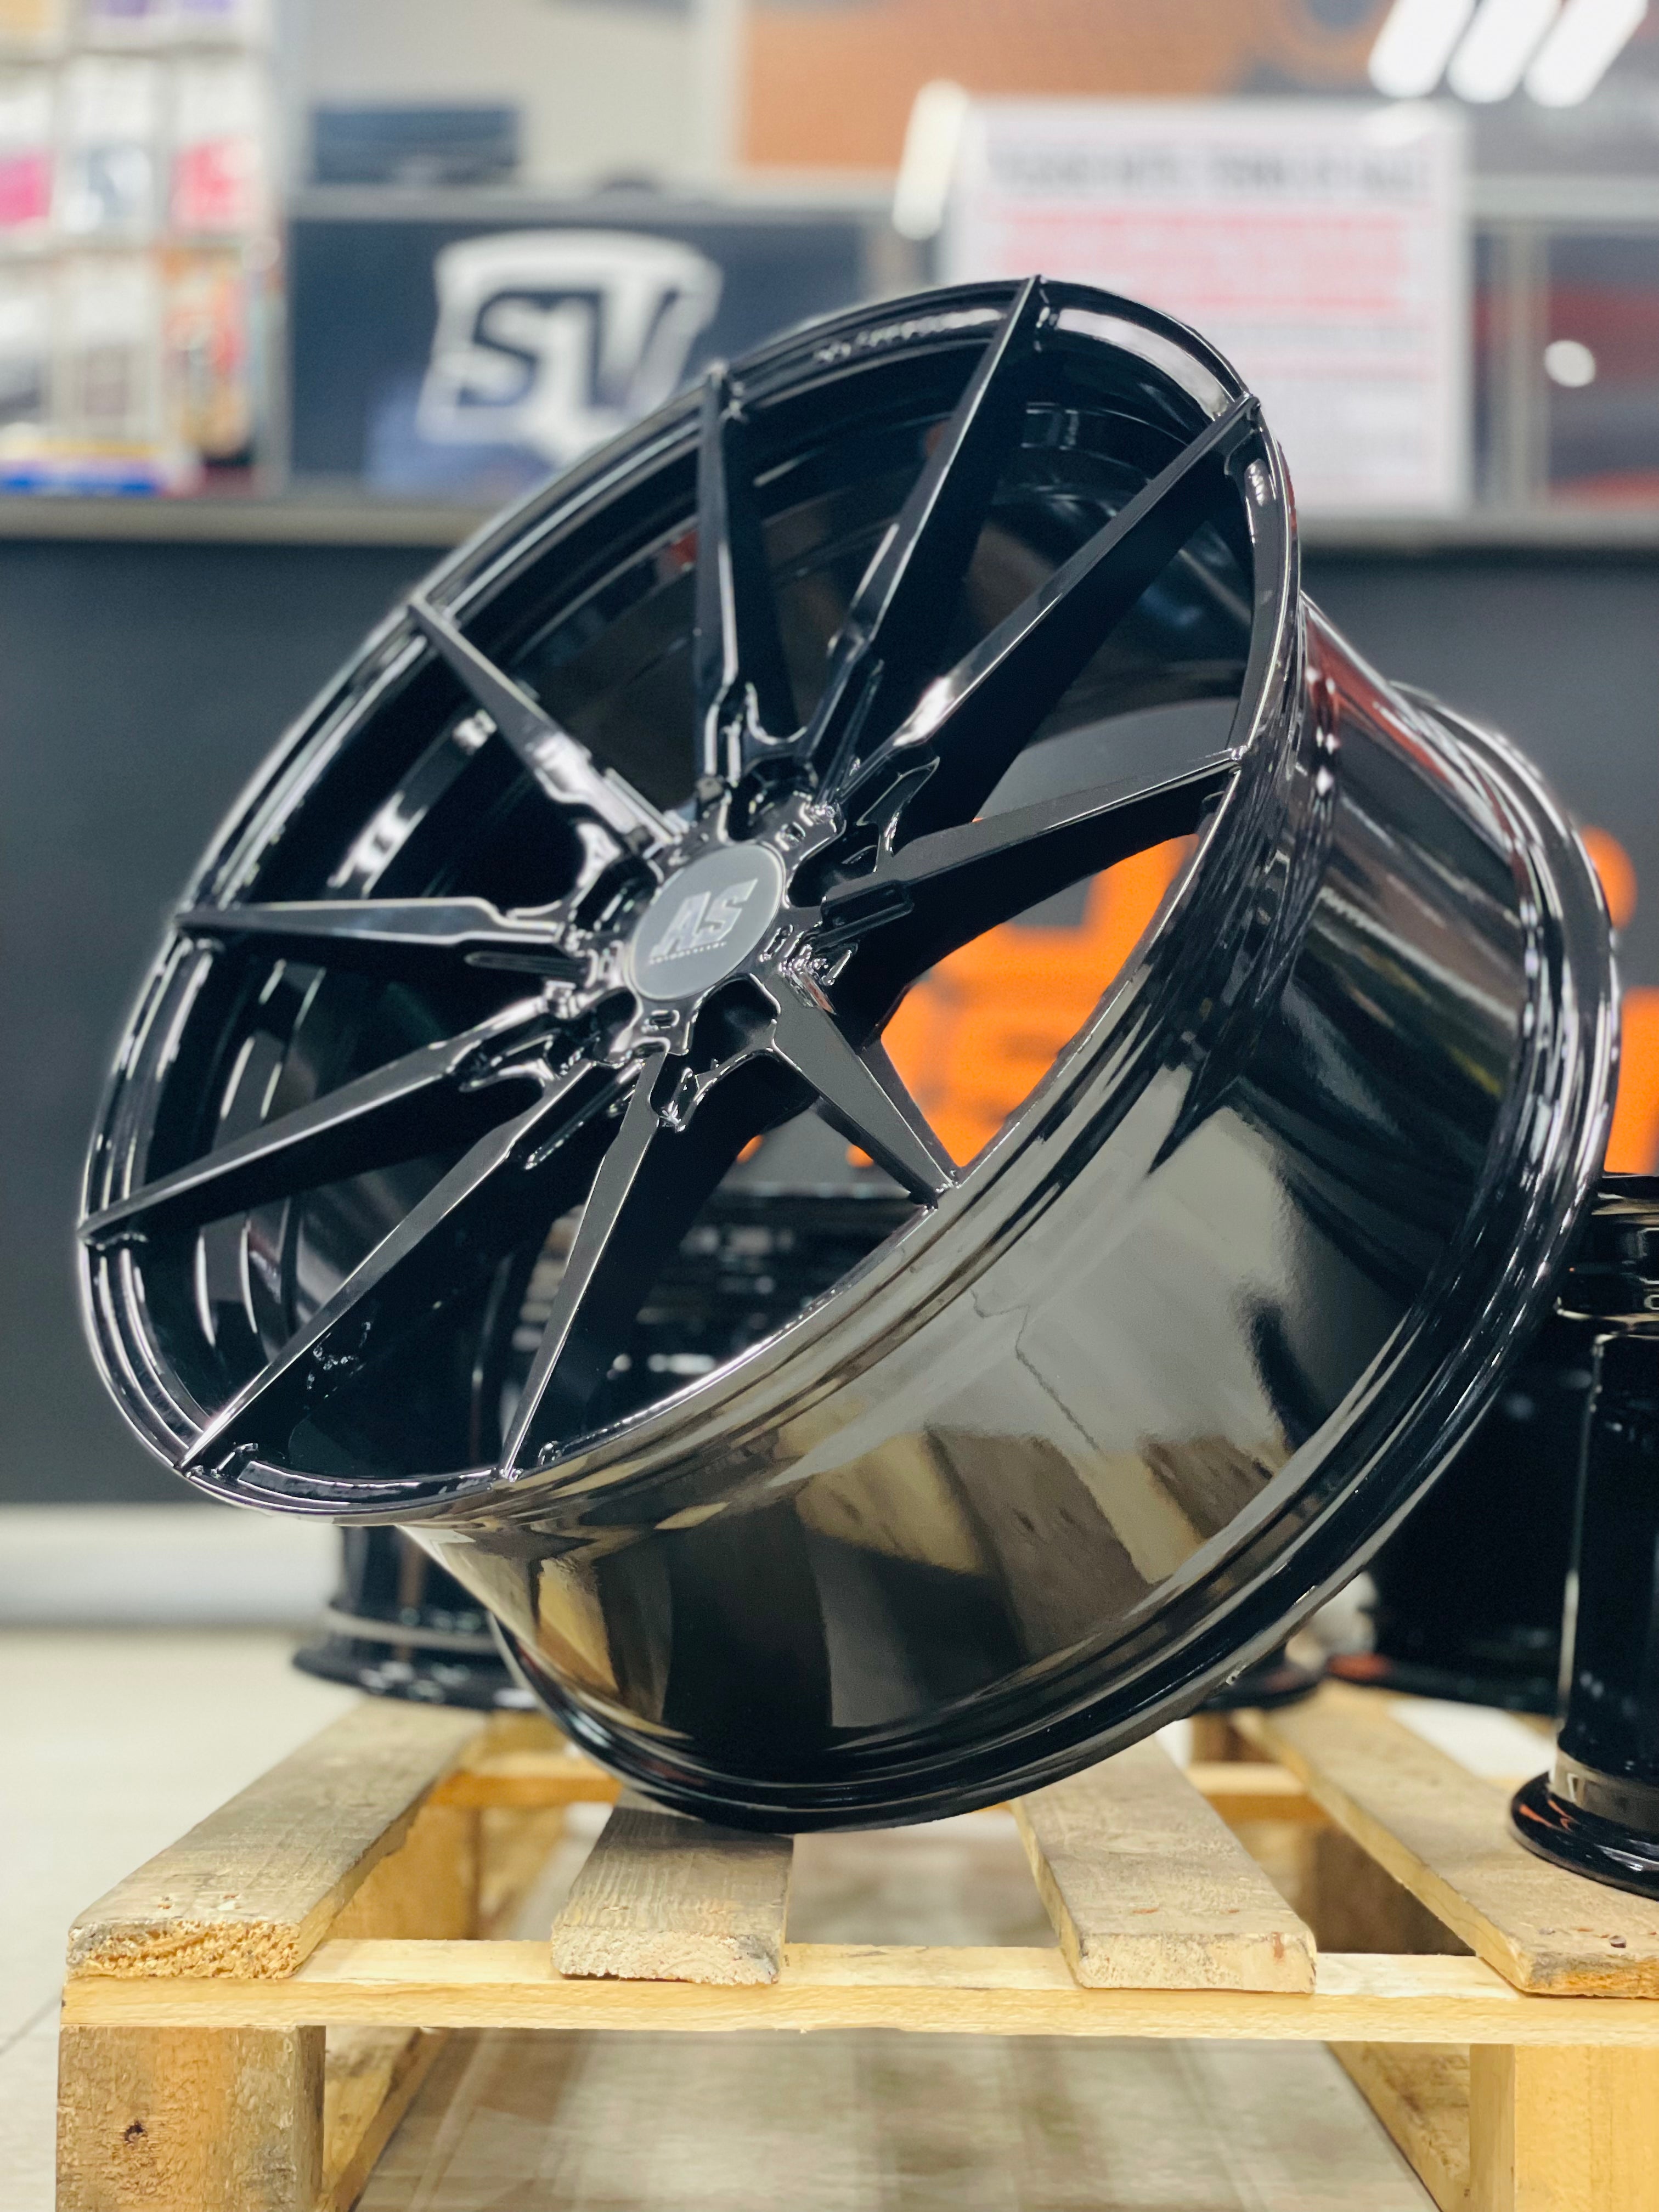 21” AS-5010 5x112 9j PCD gloss black wheels perfect for TIGUAN